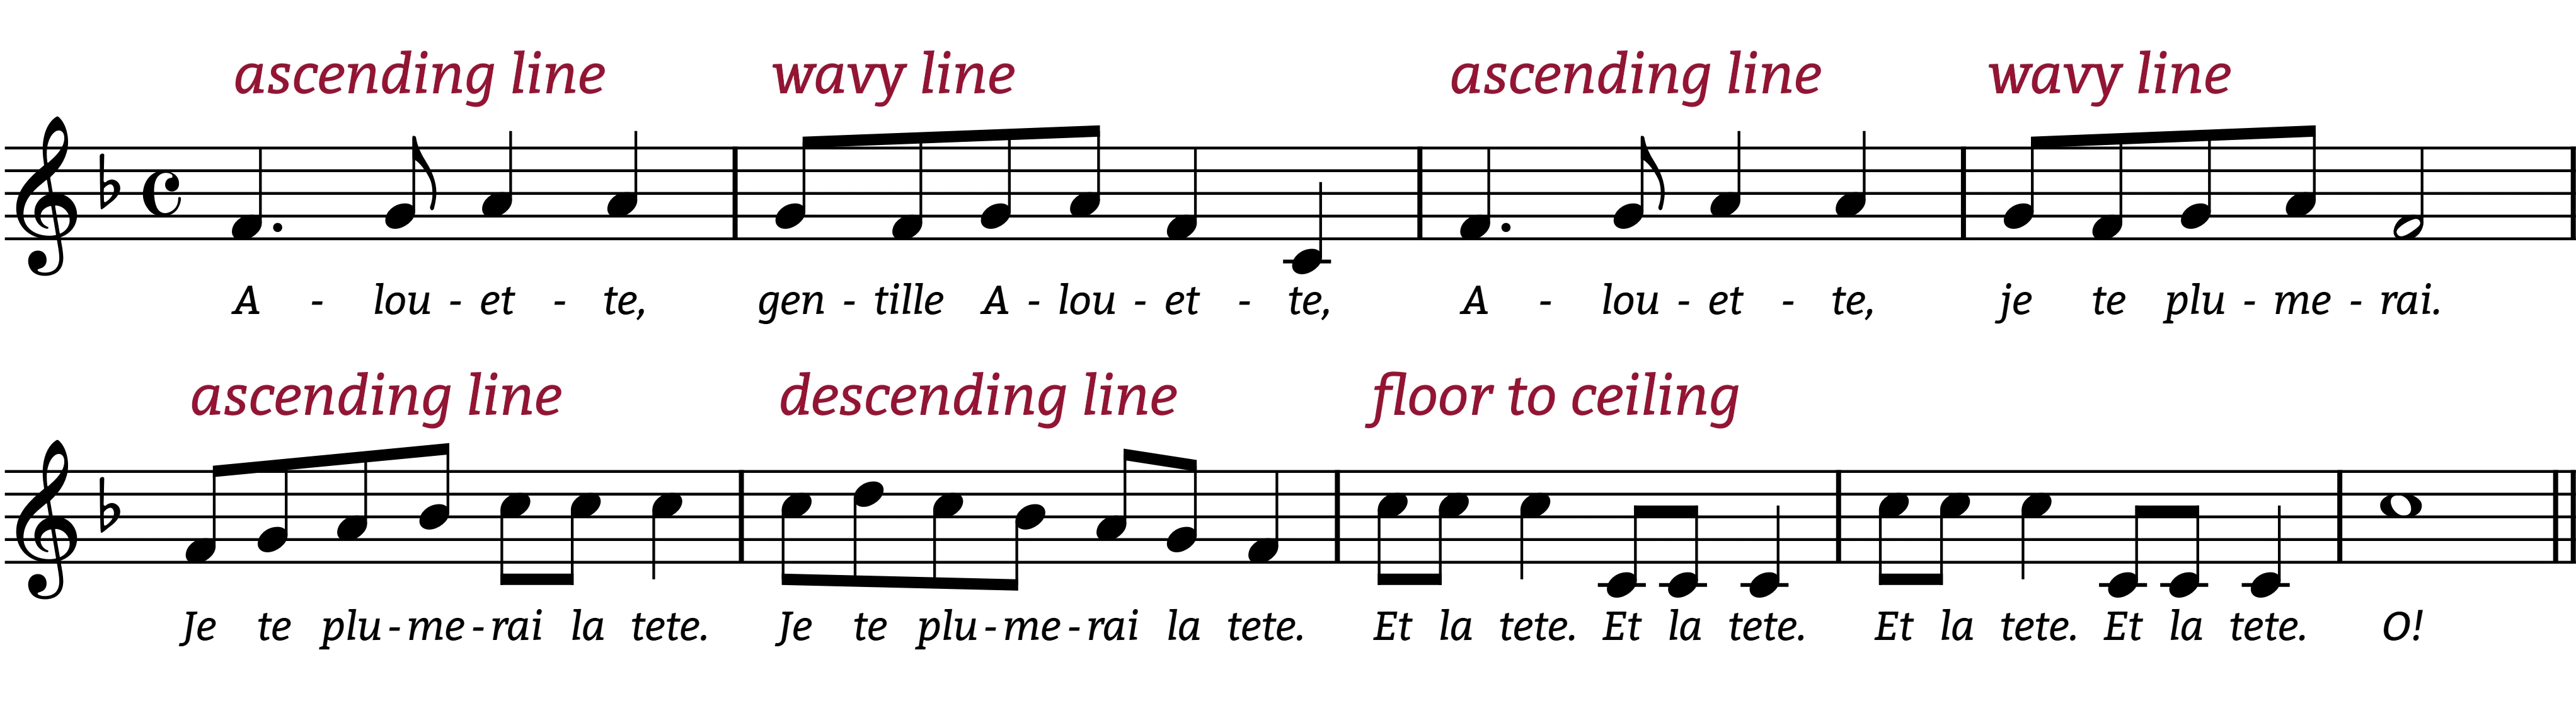 alouette-shapes melodic figures